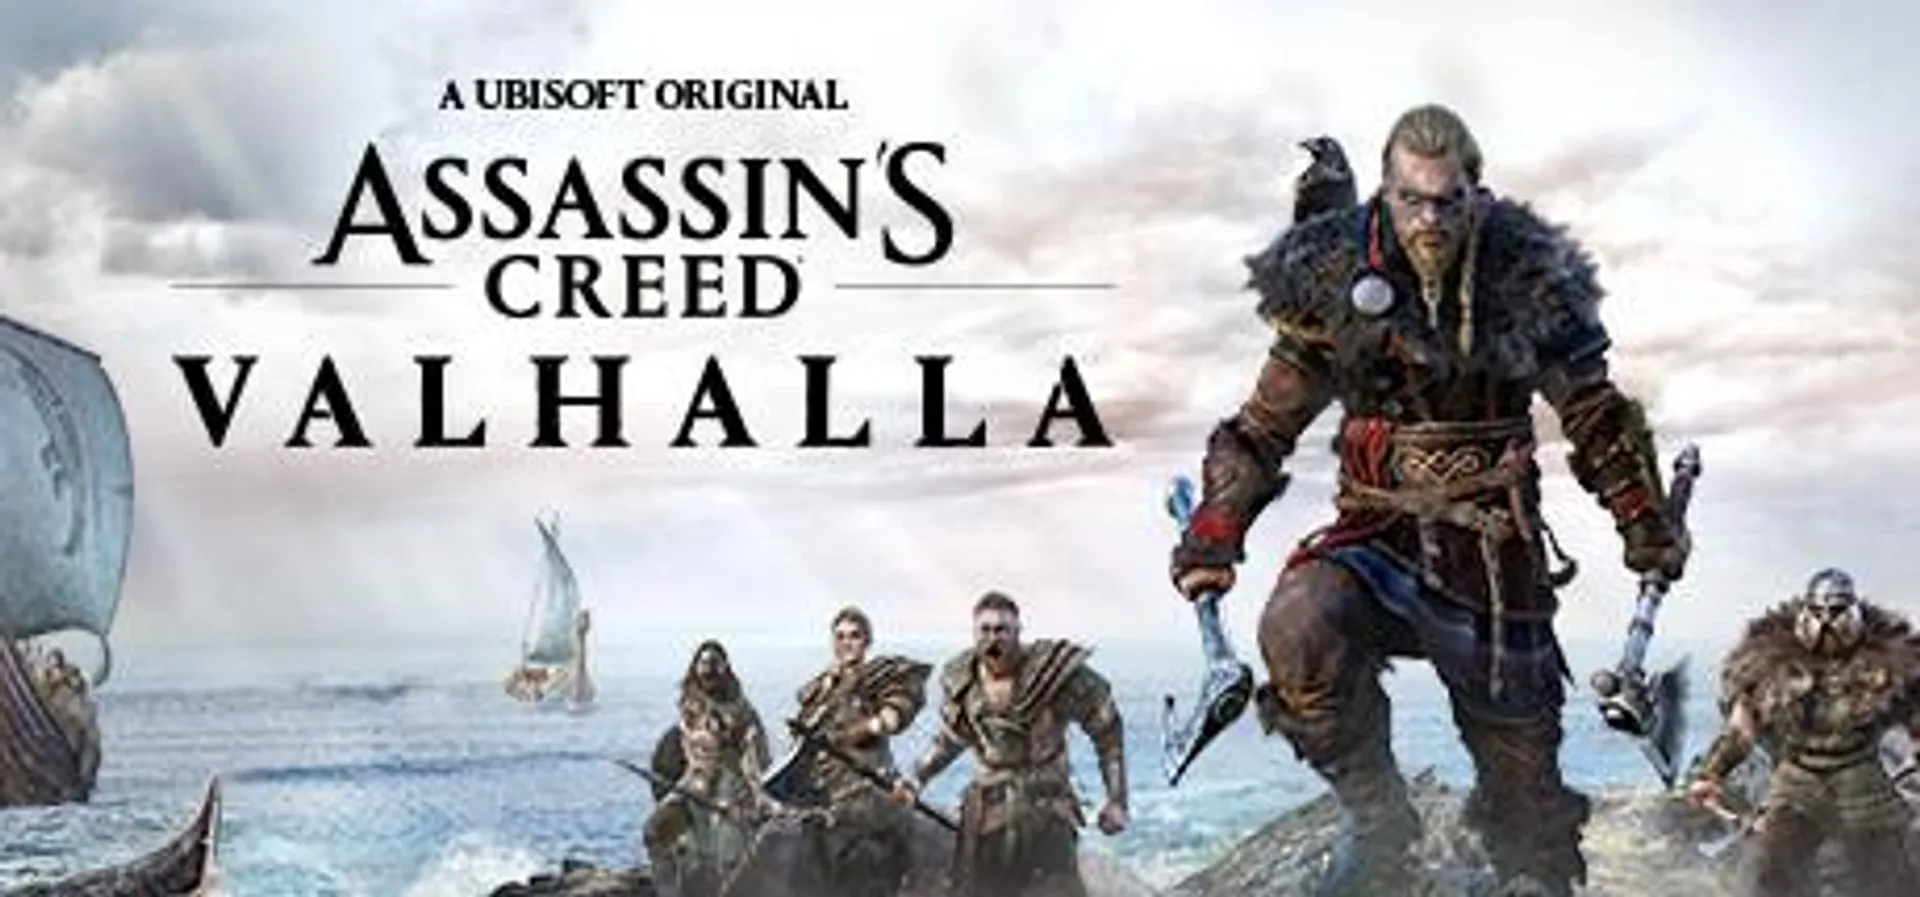 Save 67% on Assassin's Creed Valhalla on Steam